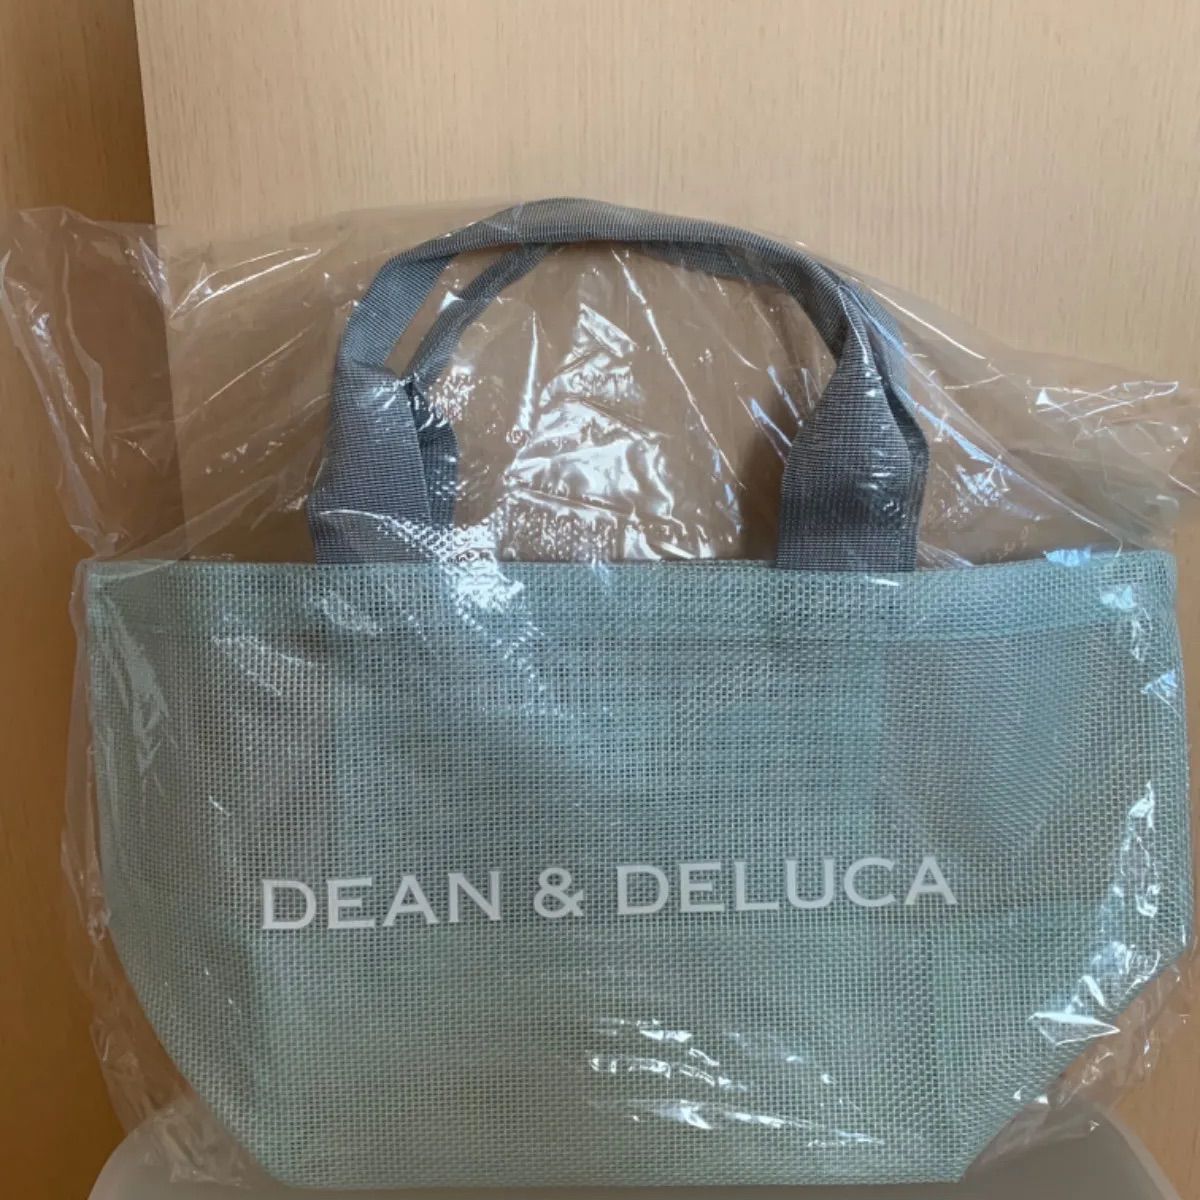 DEAN&DELUCA メッシュトートバッグ ミントブルー Sサイズ - メルカリ